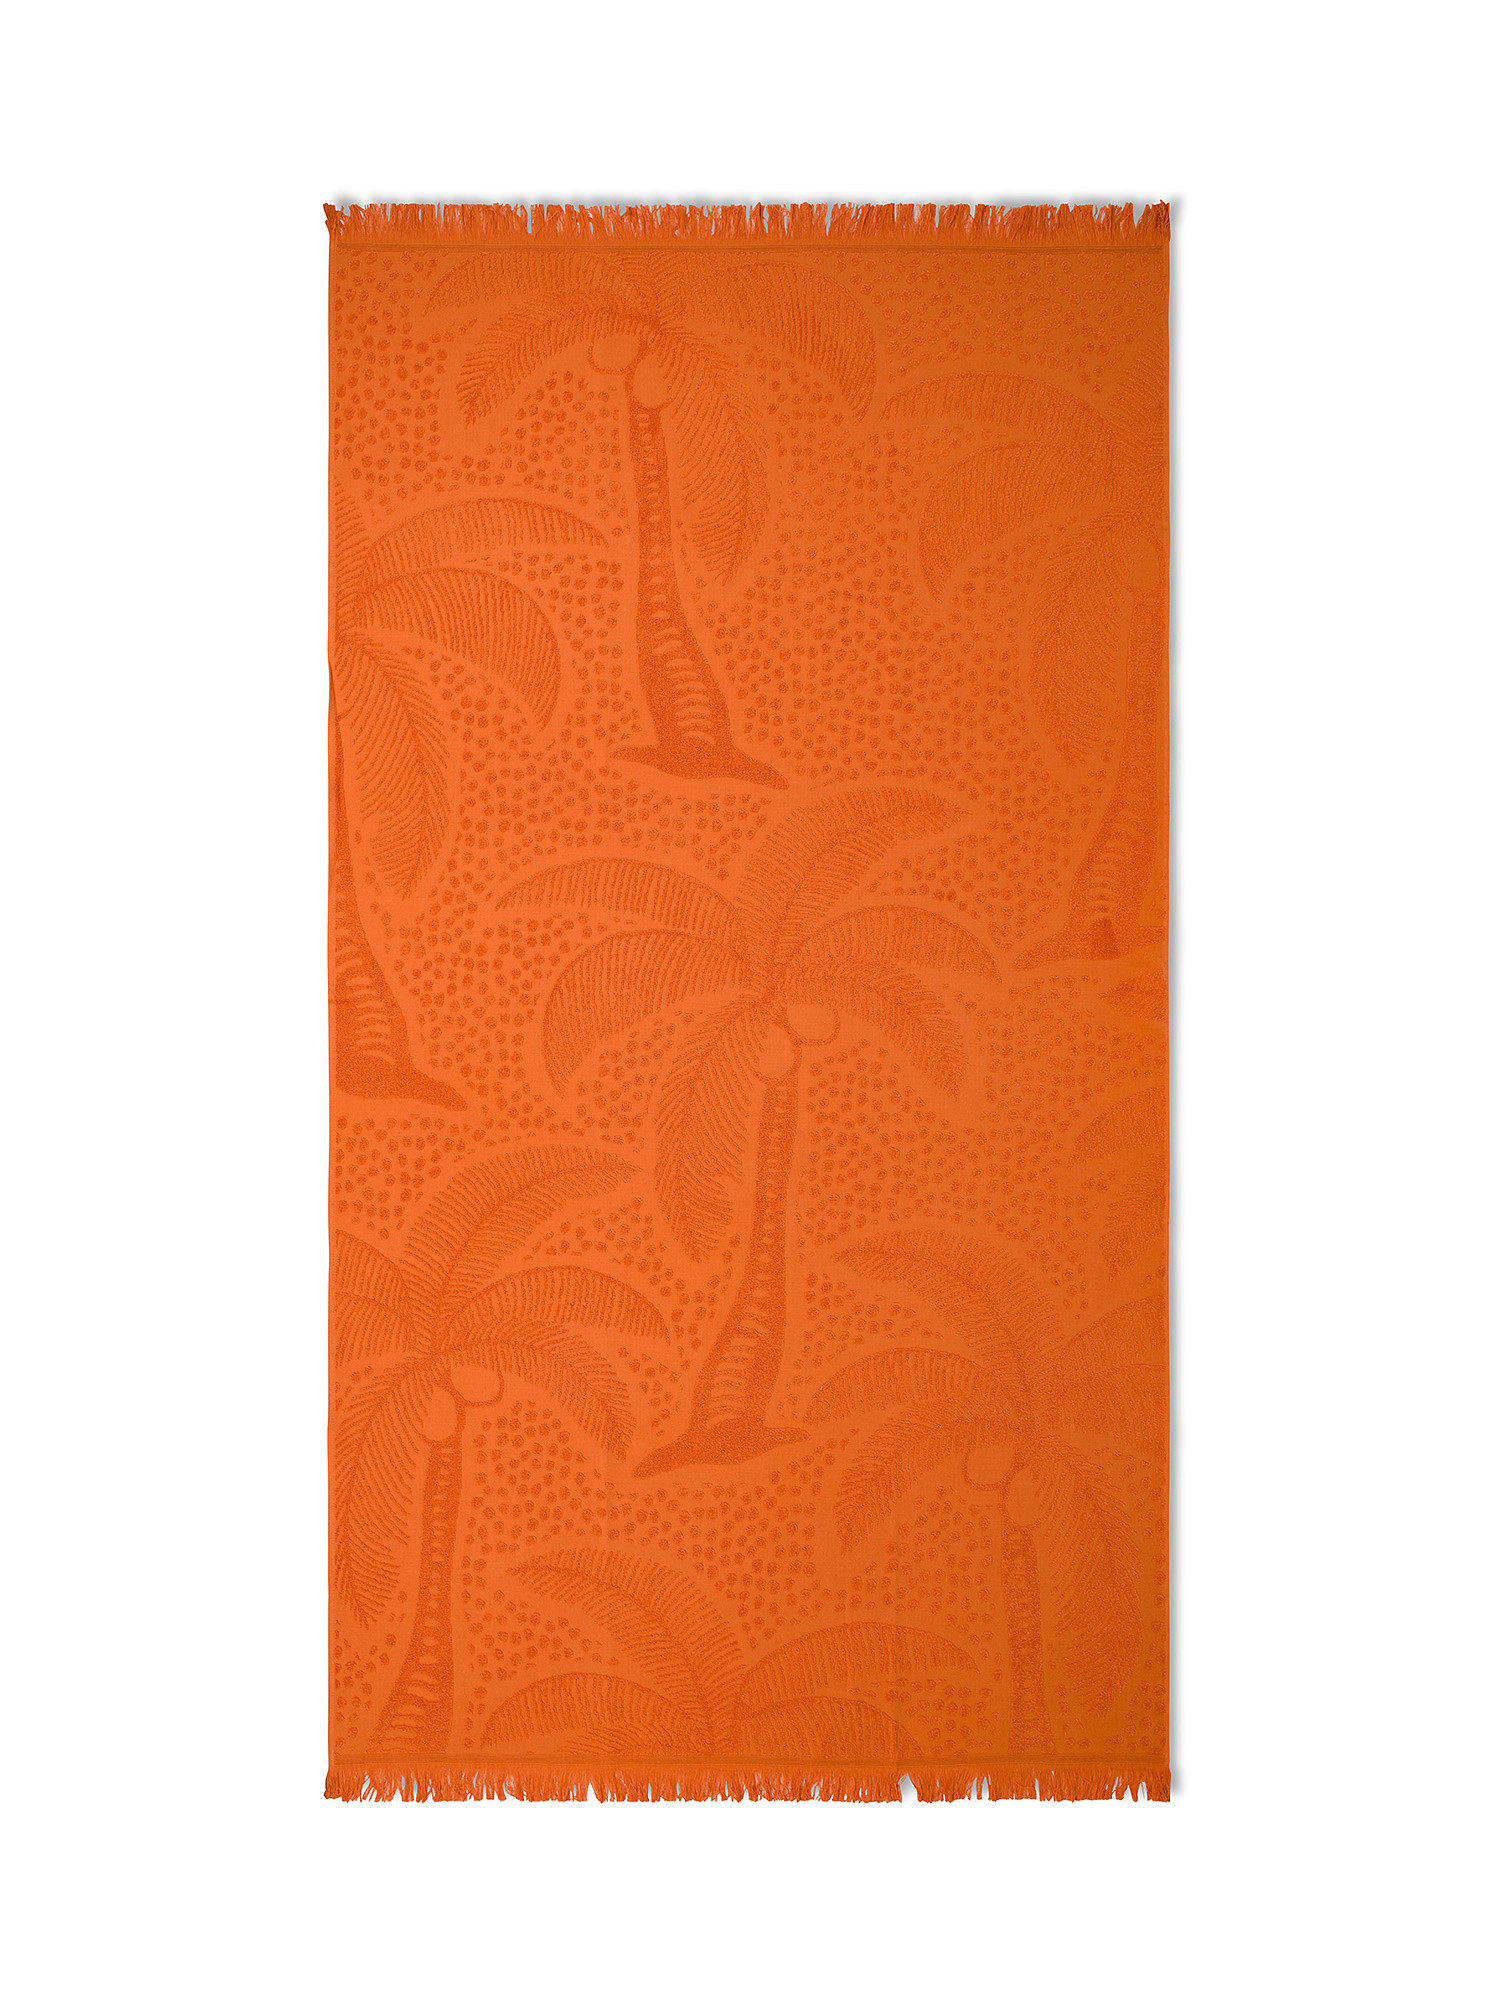 Telo mare ampio in spugna motivo tropicale, Arancione, large image number 0